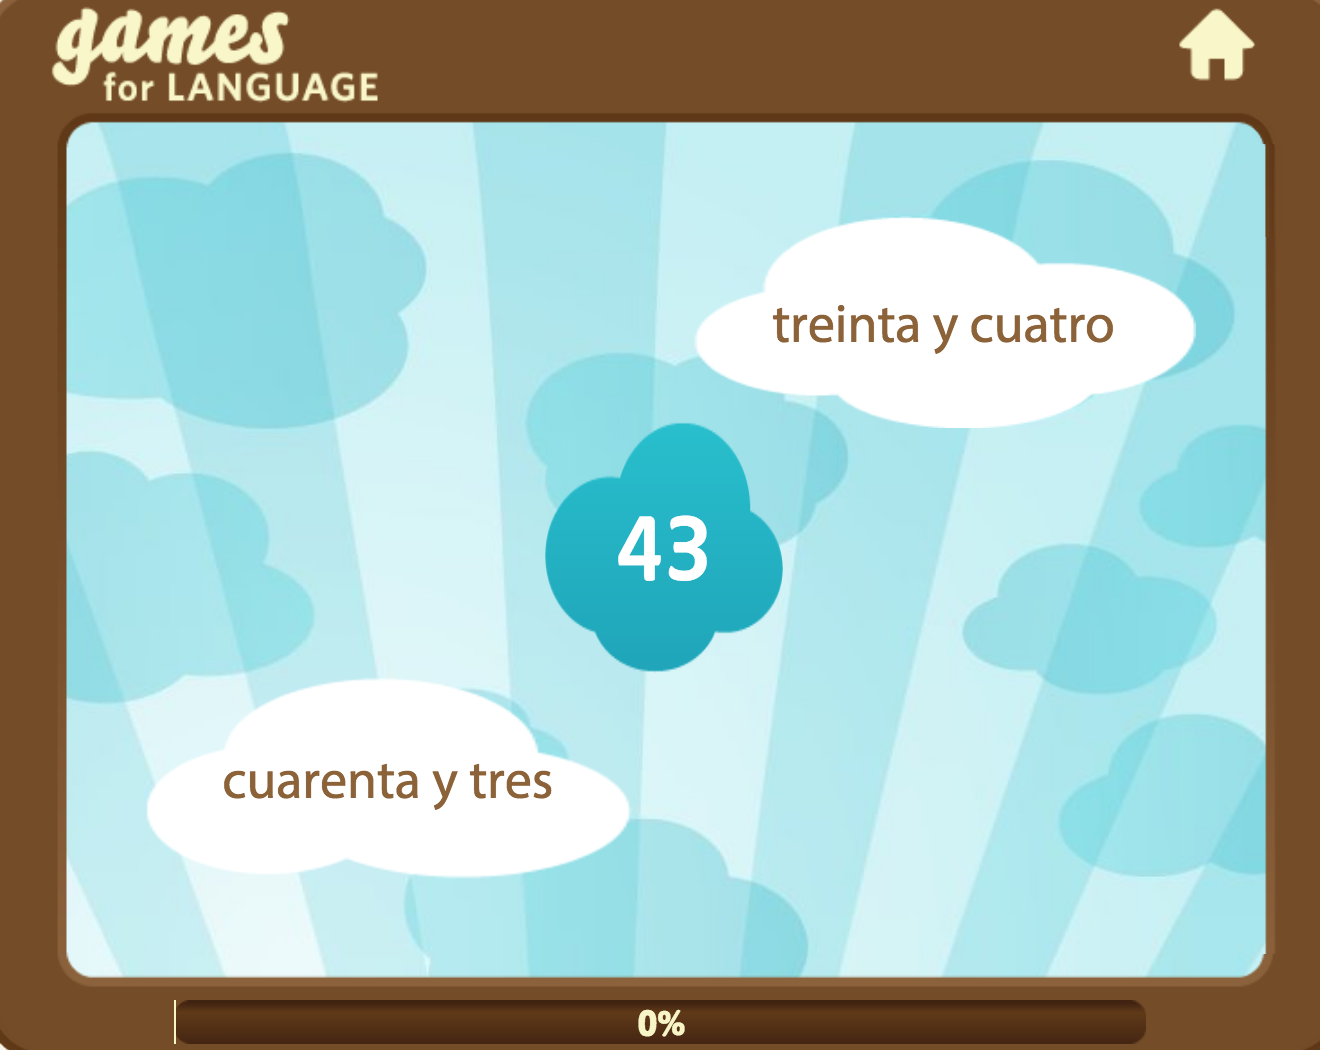 Spanish number game - Gamesforlanguage.com